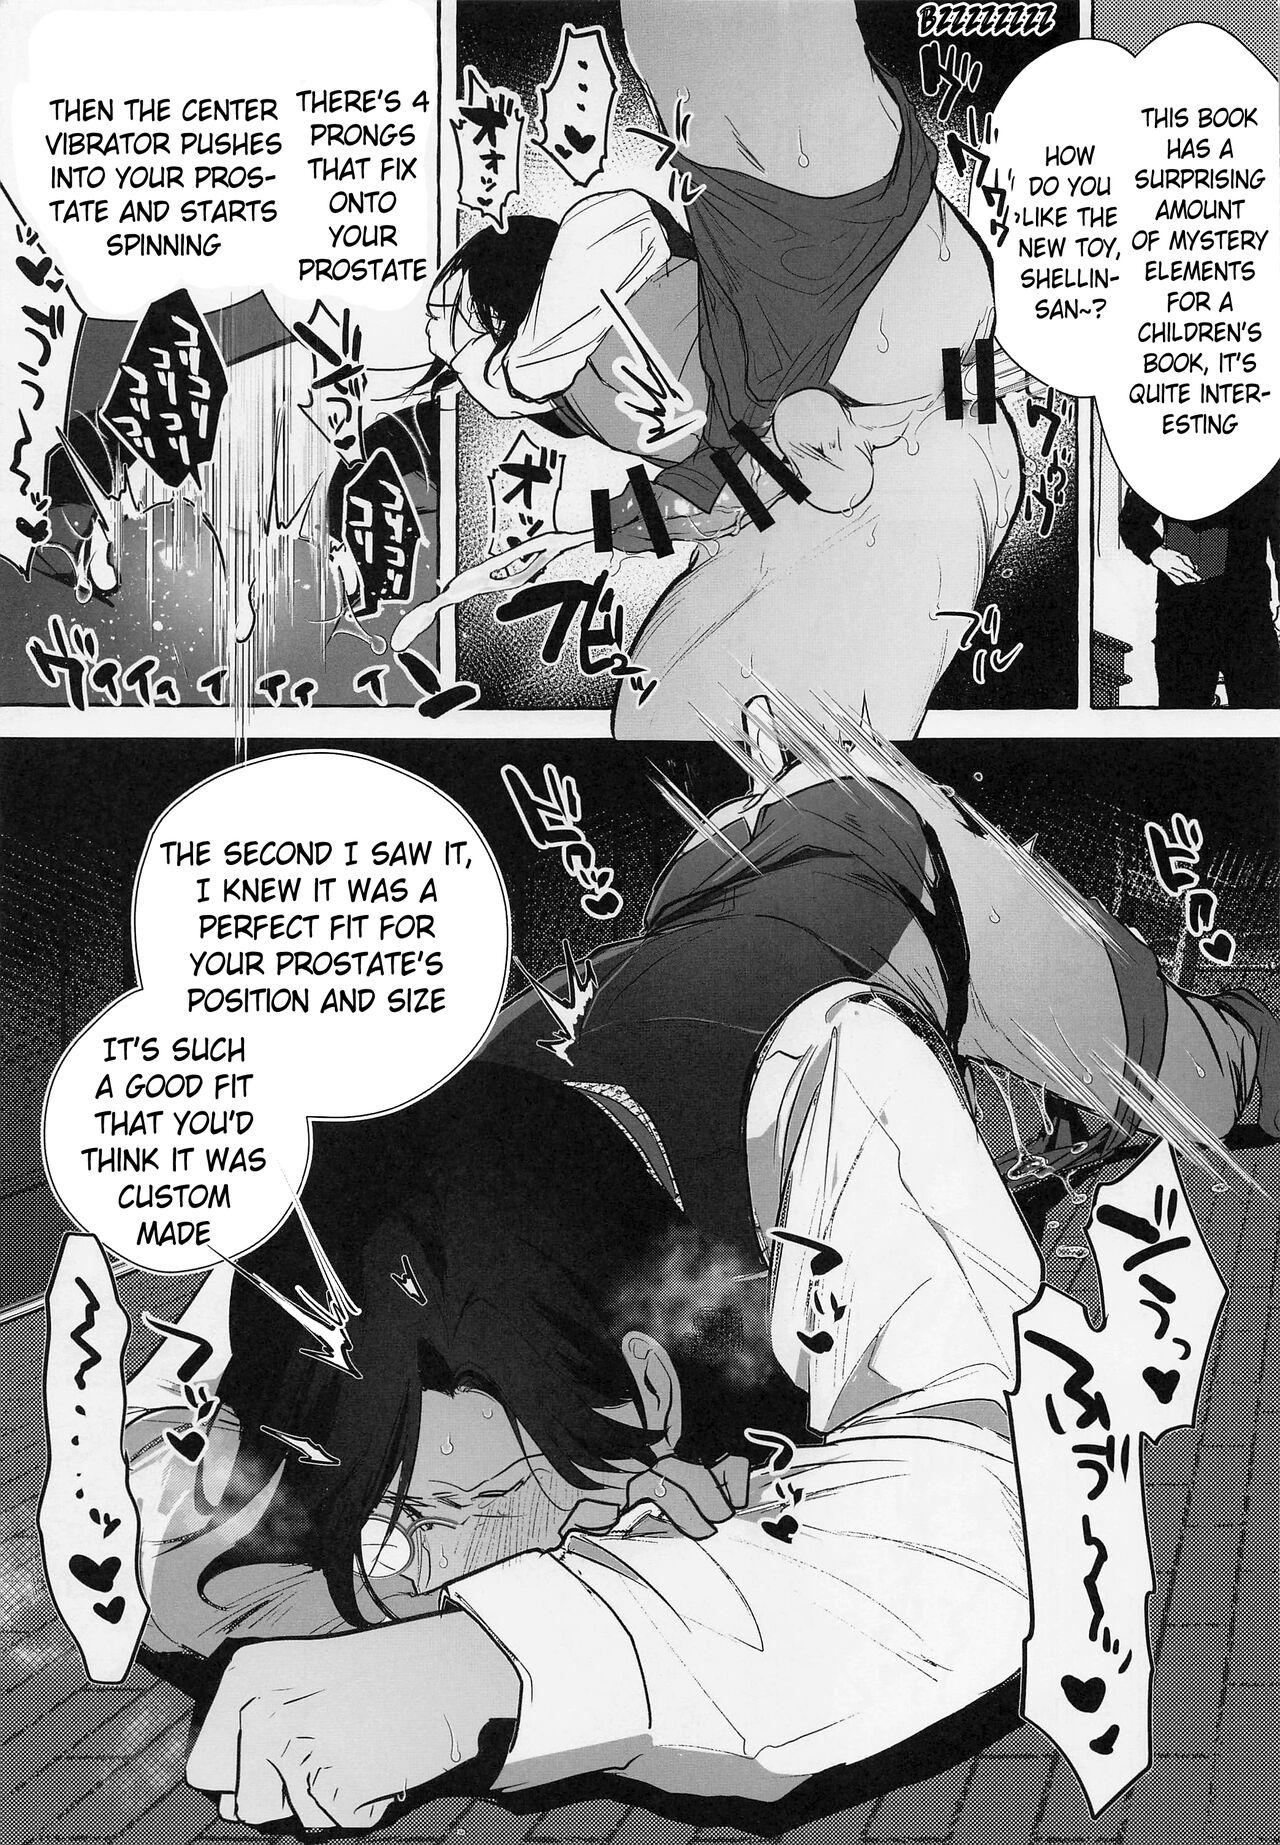 Adorable Meitantei ga Irai wo Kotowaru Hi | The Day the Great Detective Refused a Request - Nijisanji Bukkake Boys - Page 6